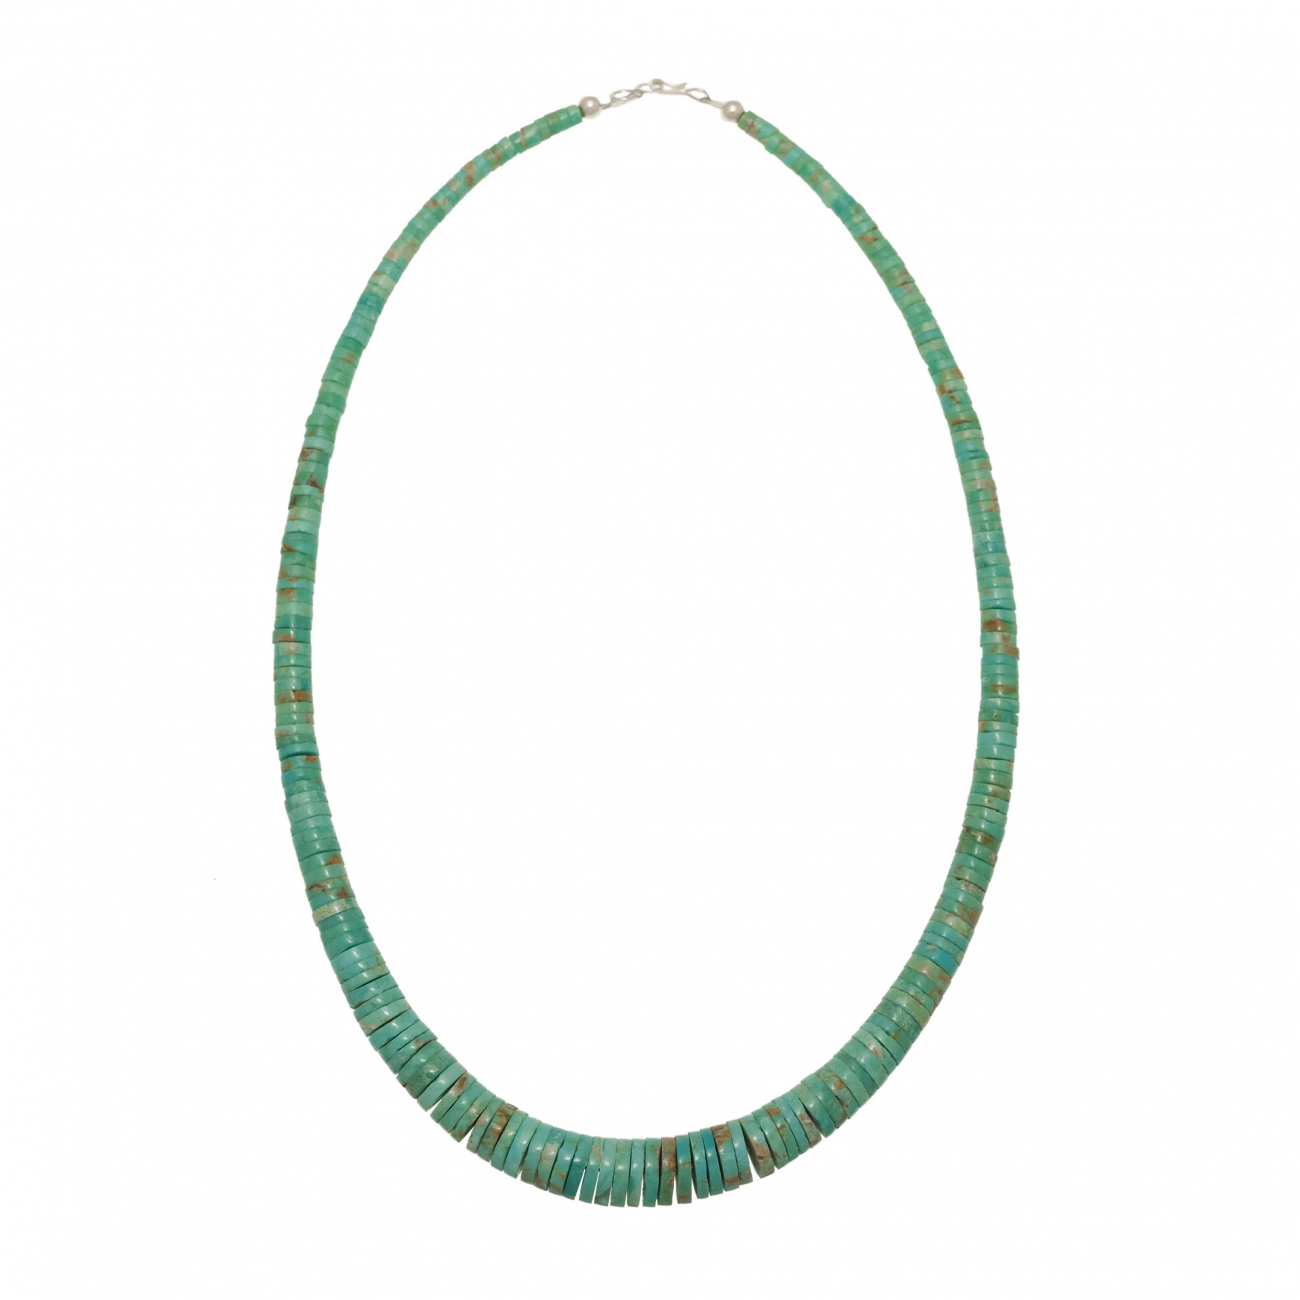 Harpo Paris necklace CO192 turquoise heishi